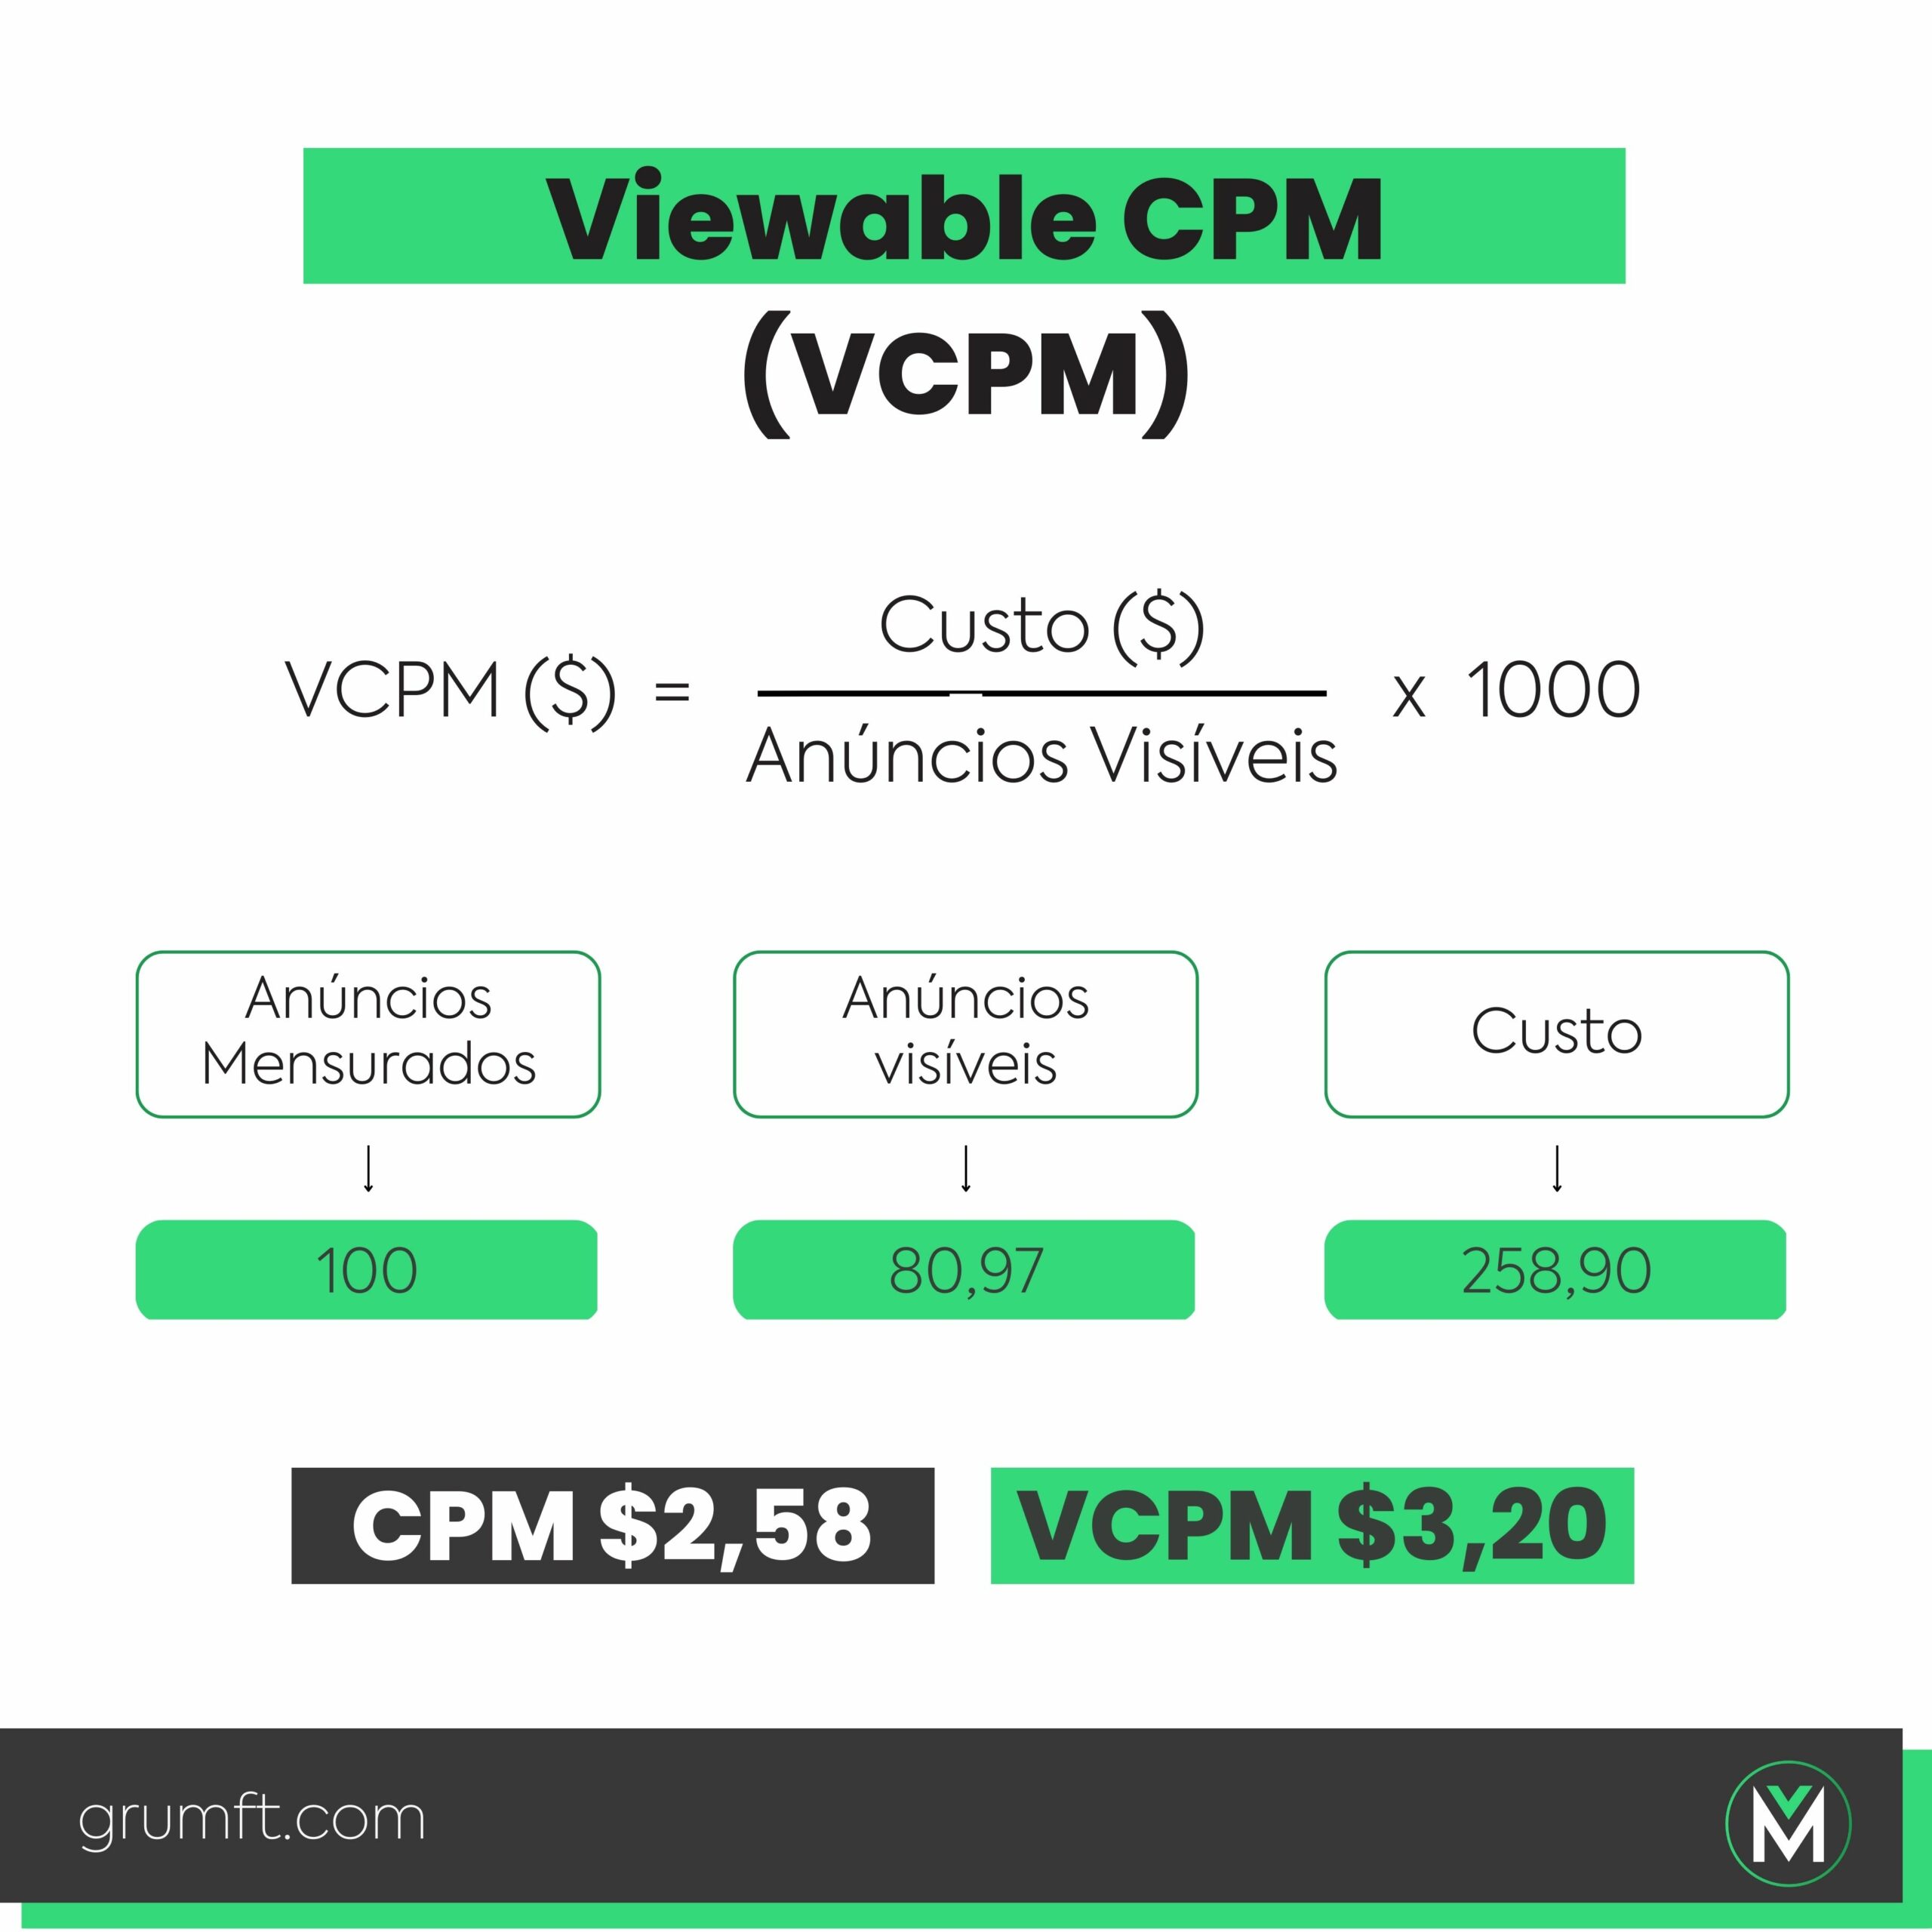 Viewable CPM (VCPM)